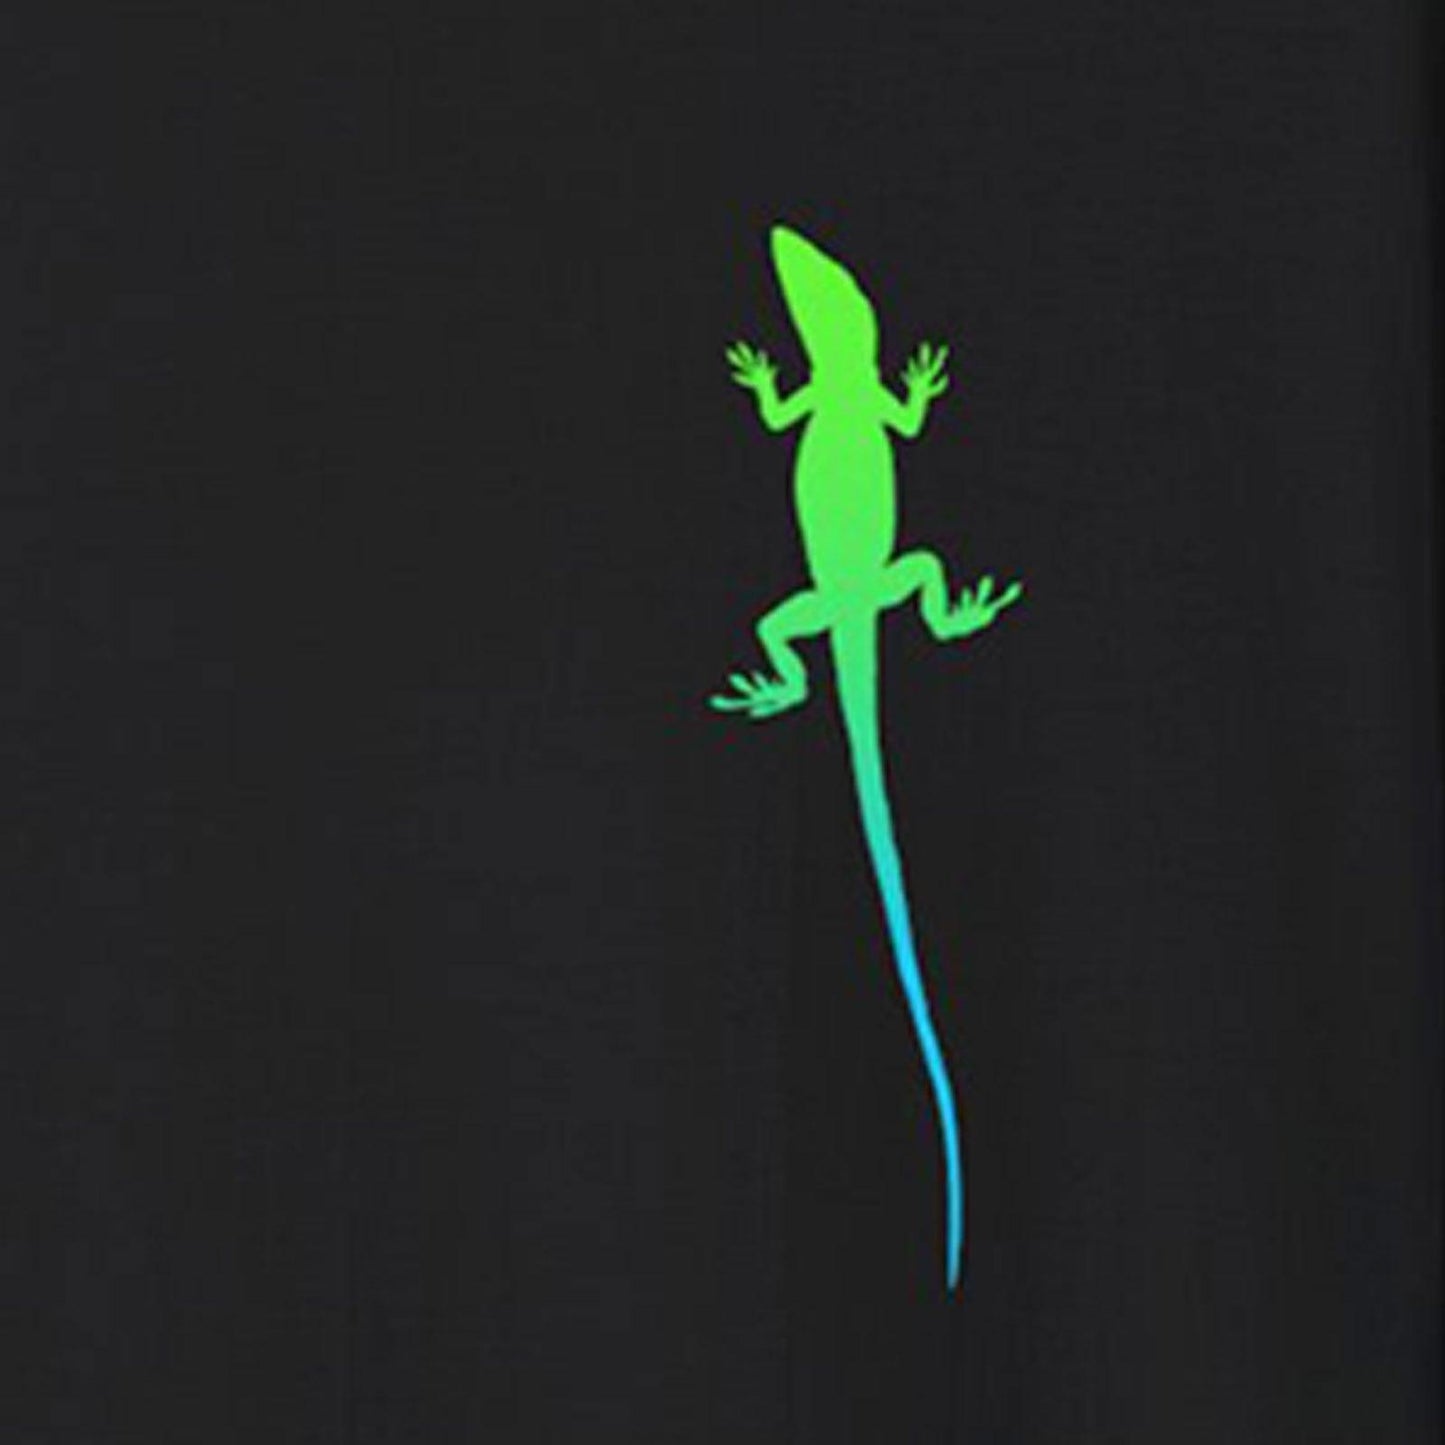 Green Anole Lizard Reptile T-shirt - Animal Instinctive